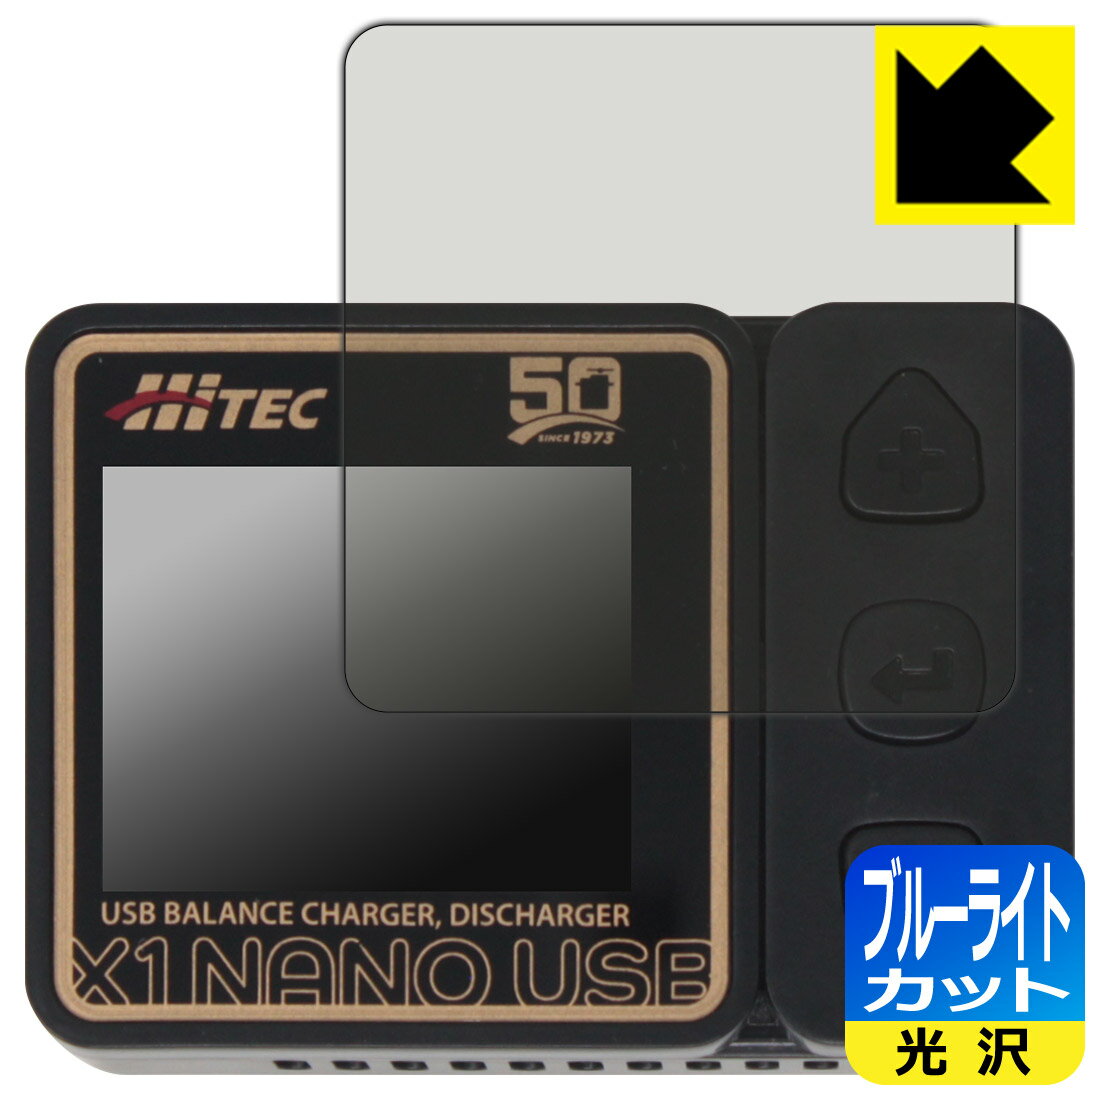 HiTEC X1 NANO USB 用 ブルーライトカット【光沢】保護フィルム 日本製 自社製造直販